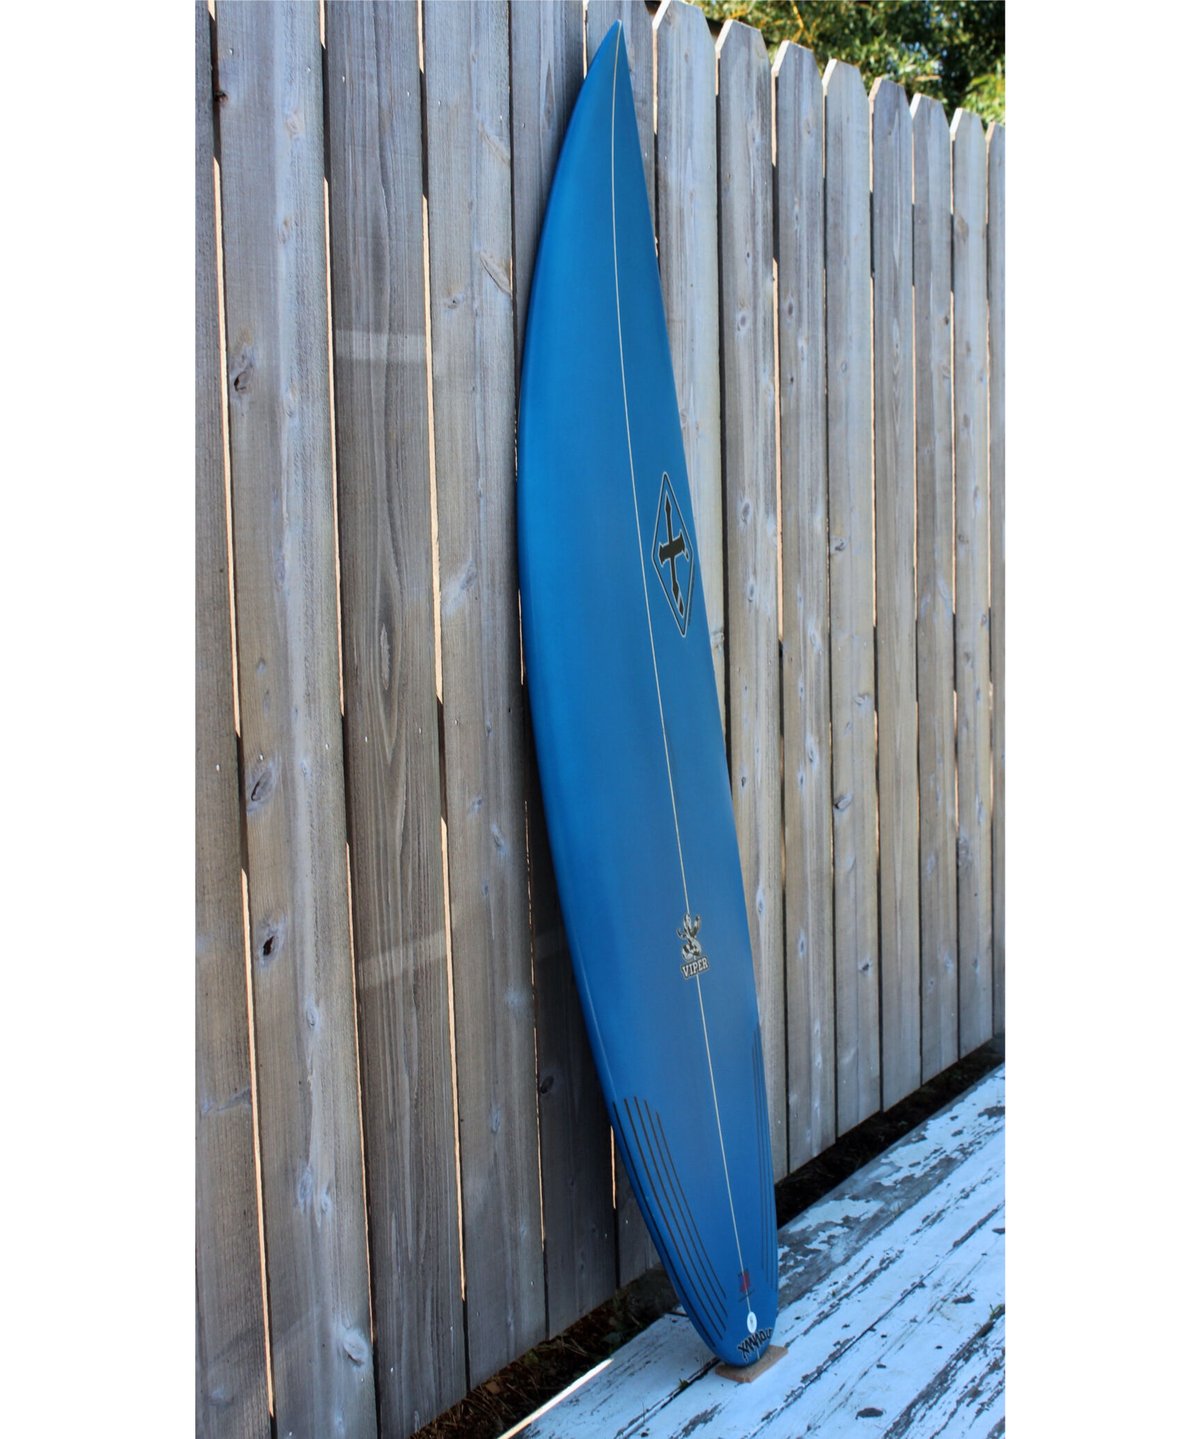 Xanadu Surfboard ザナドゥサーフボード 5'11 viper